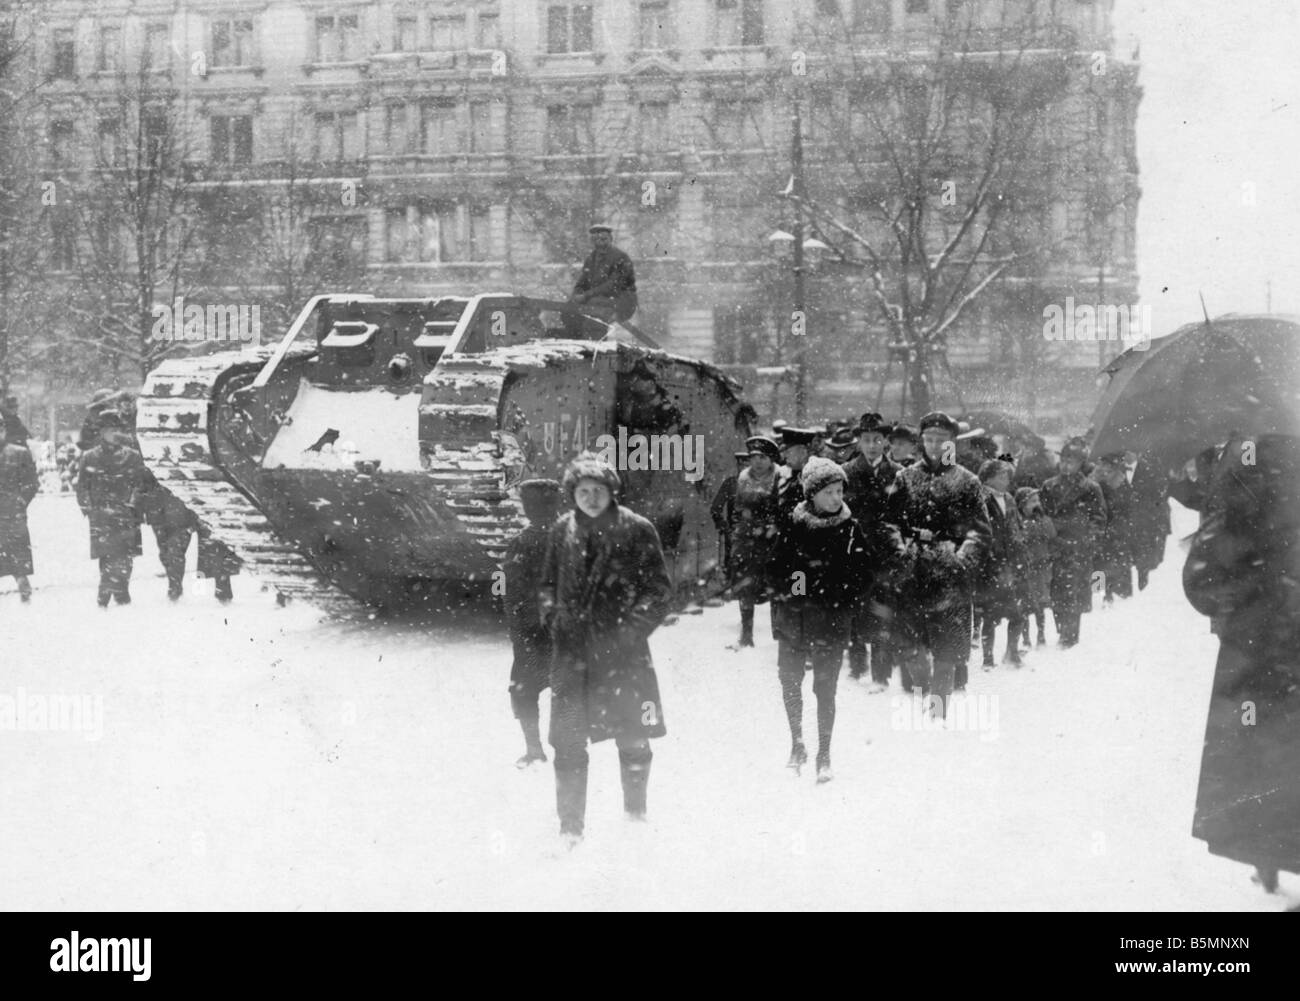 8 1916 0 0 A1 English tank in Berlin Photo Berlin World War One 1914 18 An English tank in Berlin An English tank in Tauentziens Stock Photo